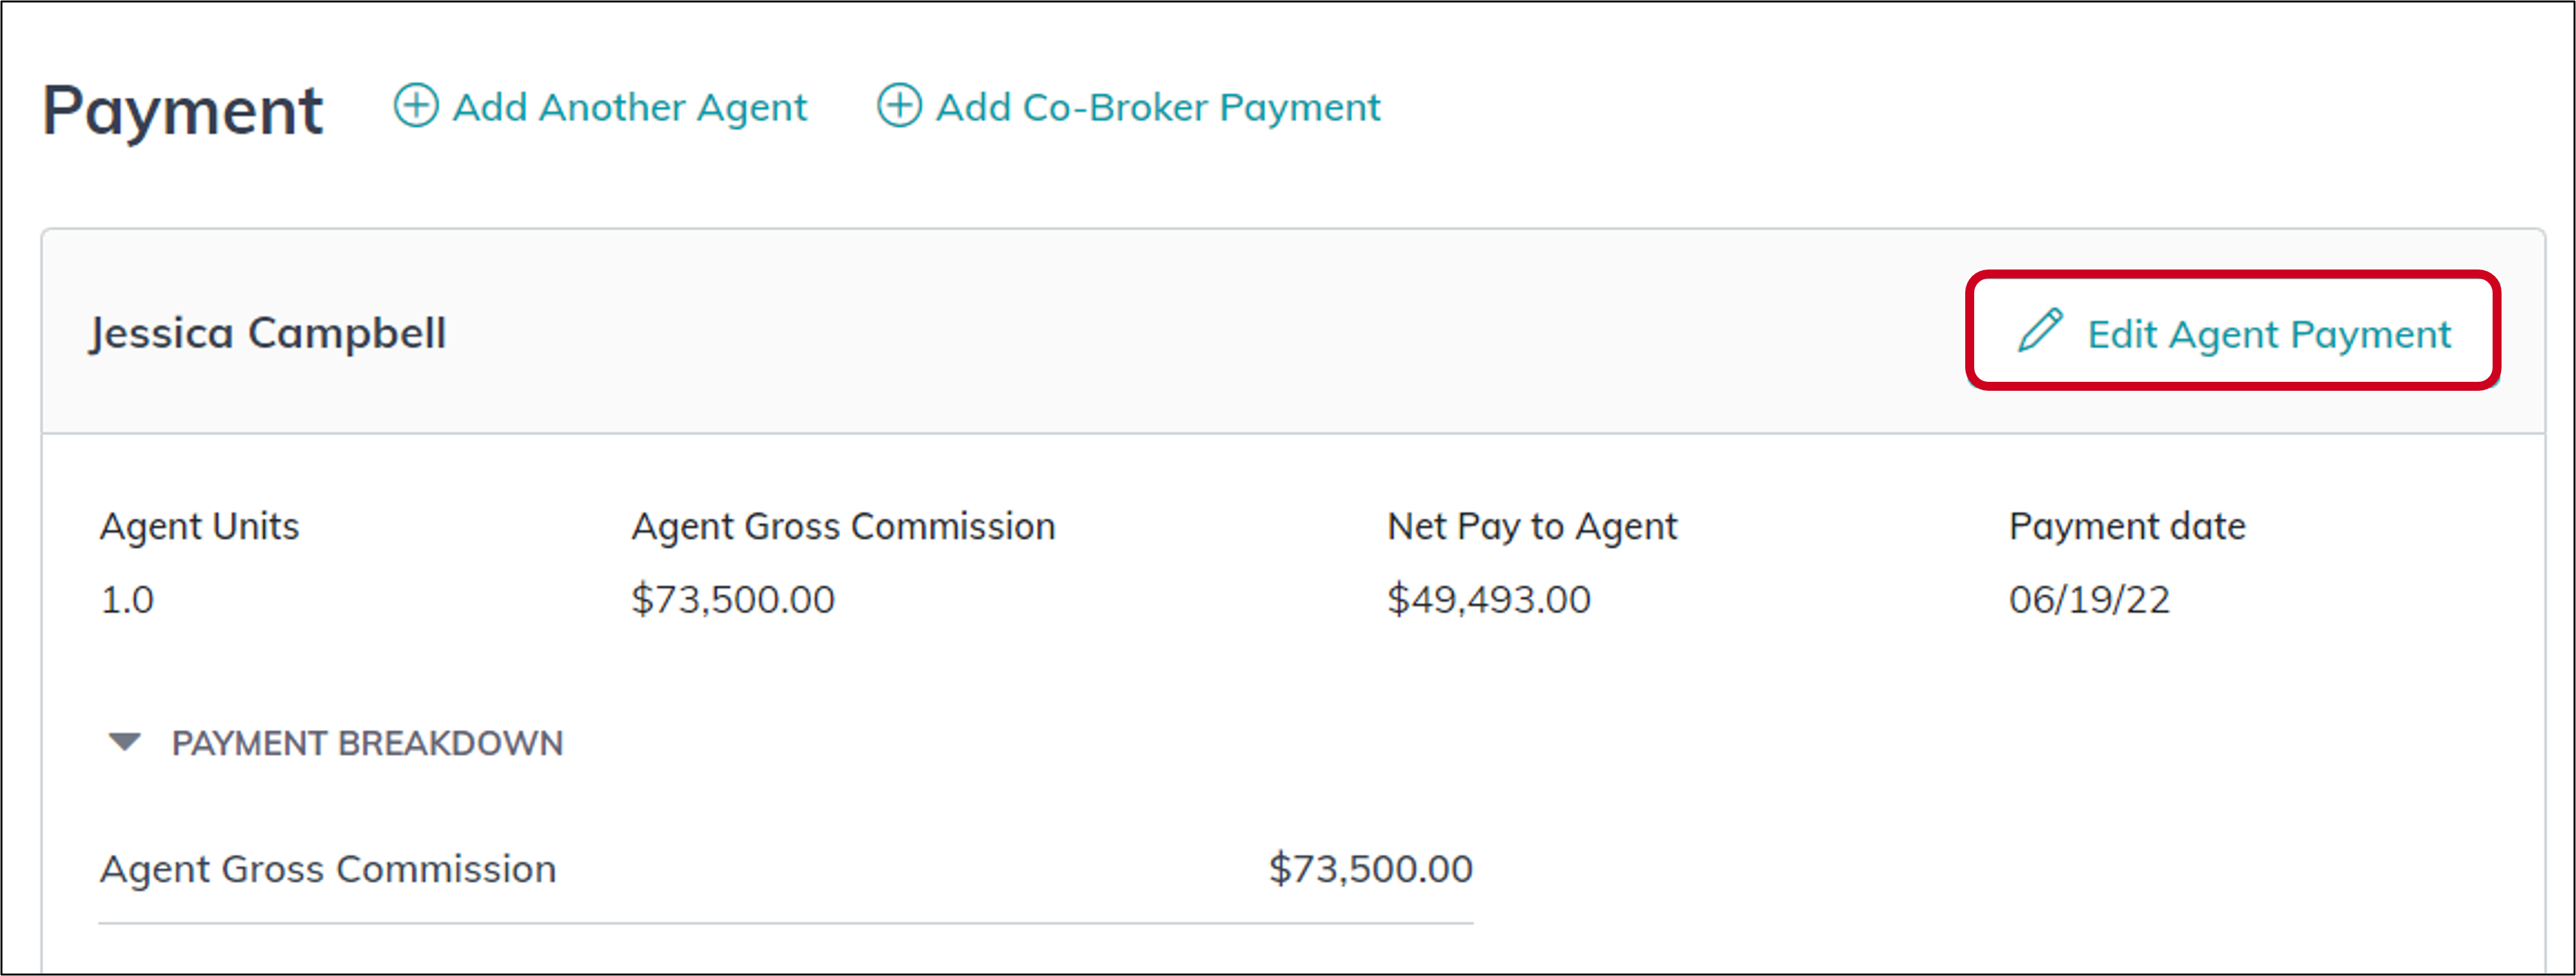 commissions_click_edit_agent_payment.png